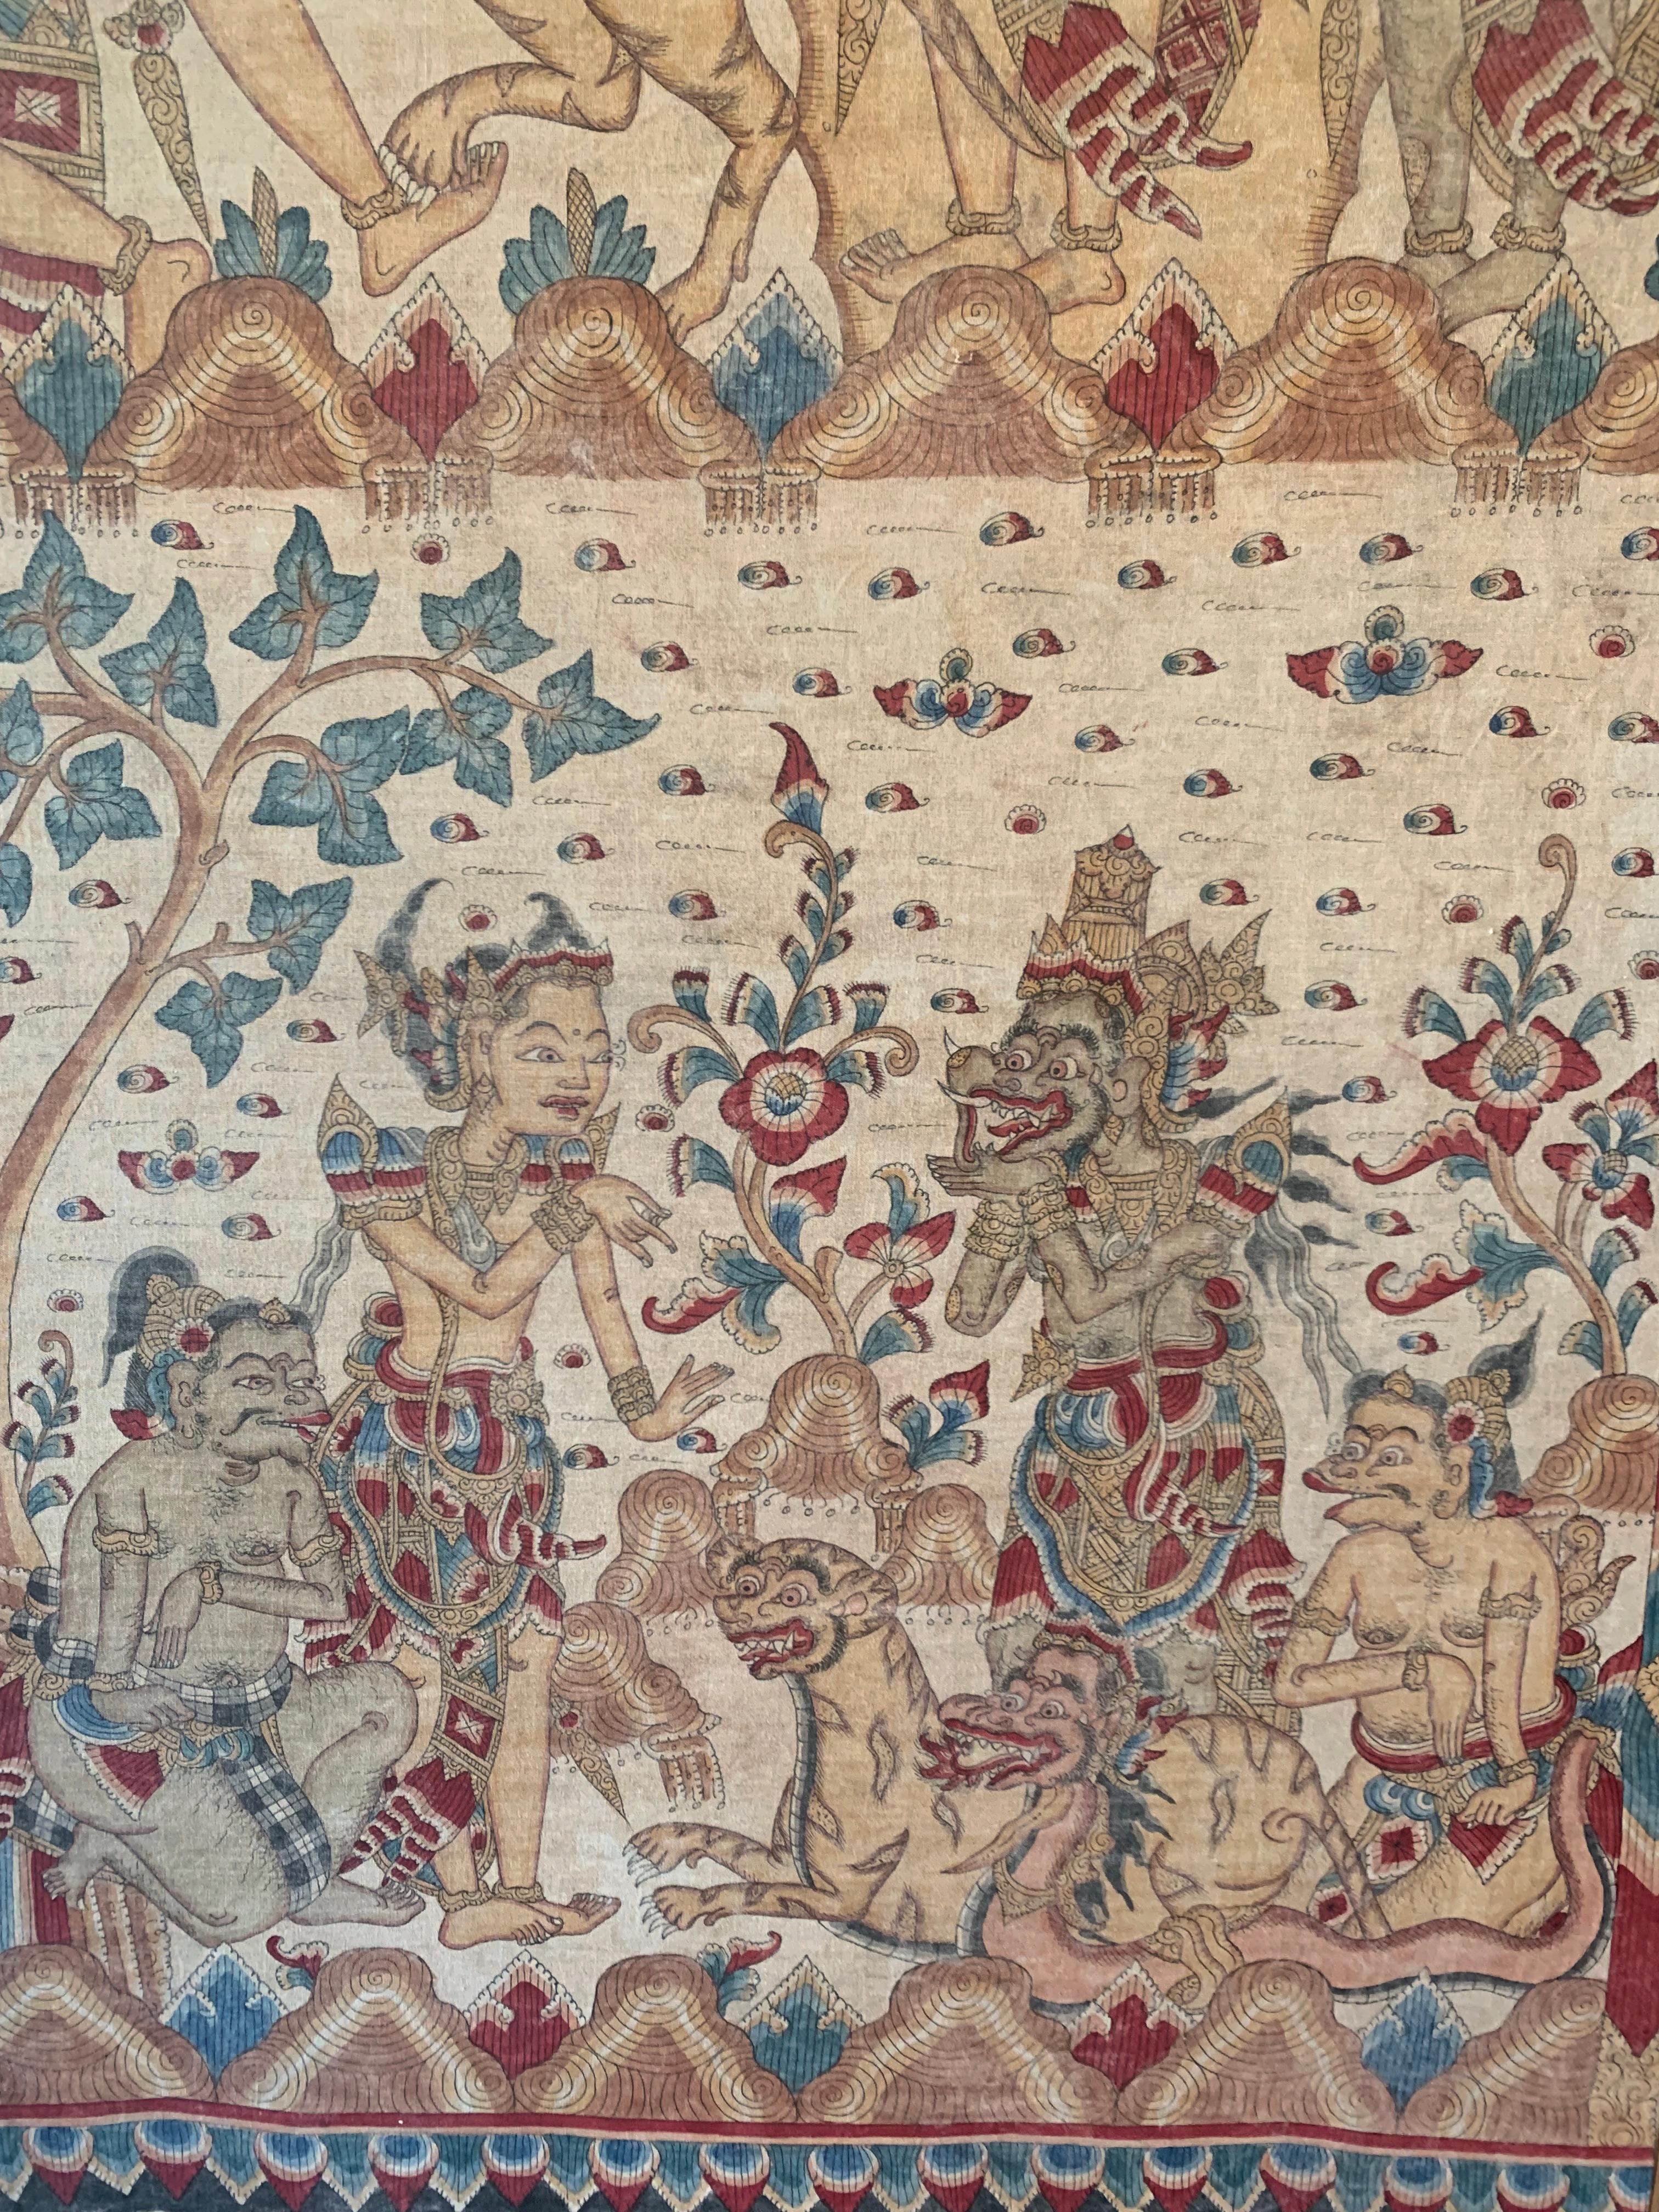 Bali Hindu Textile Framed 'Kamasan' Painting, Indonesia C. 1950 For Sale 2